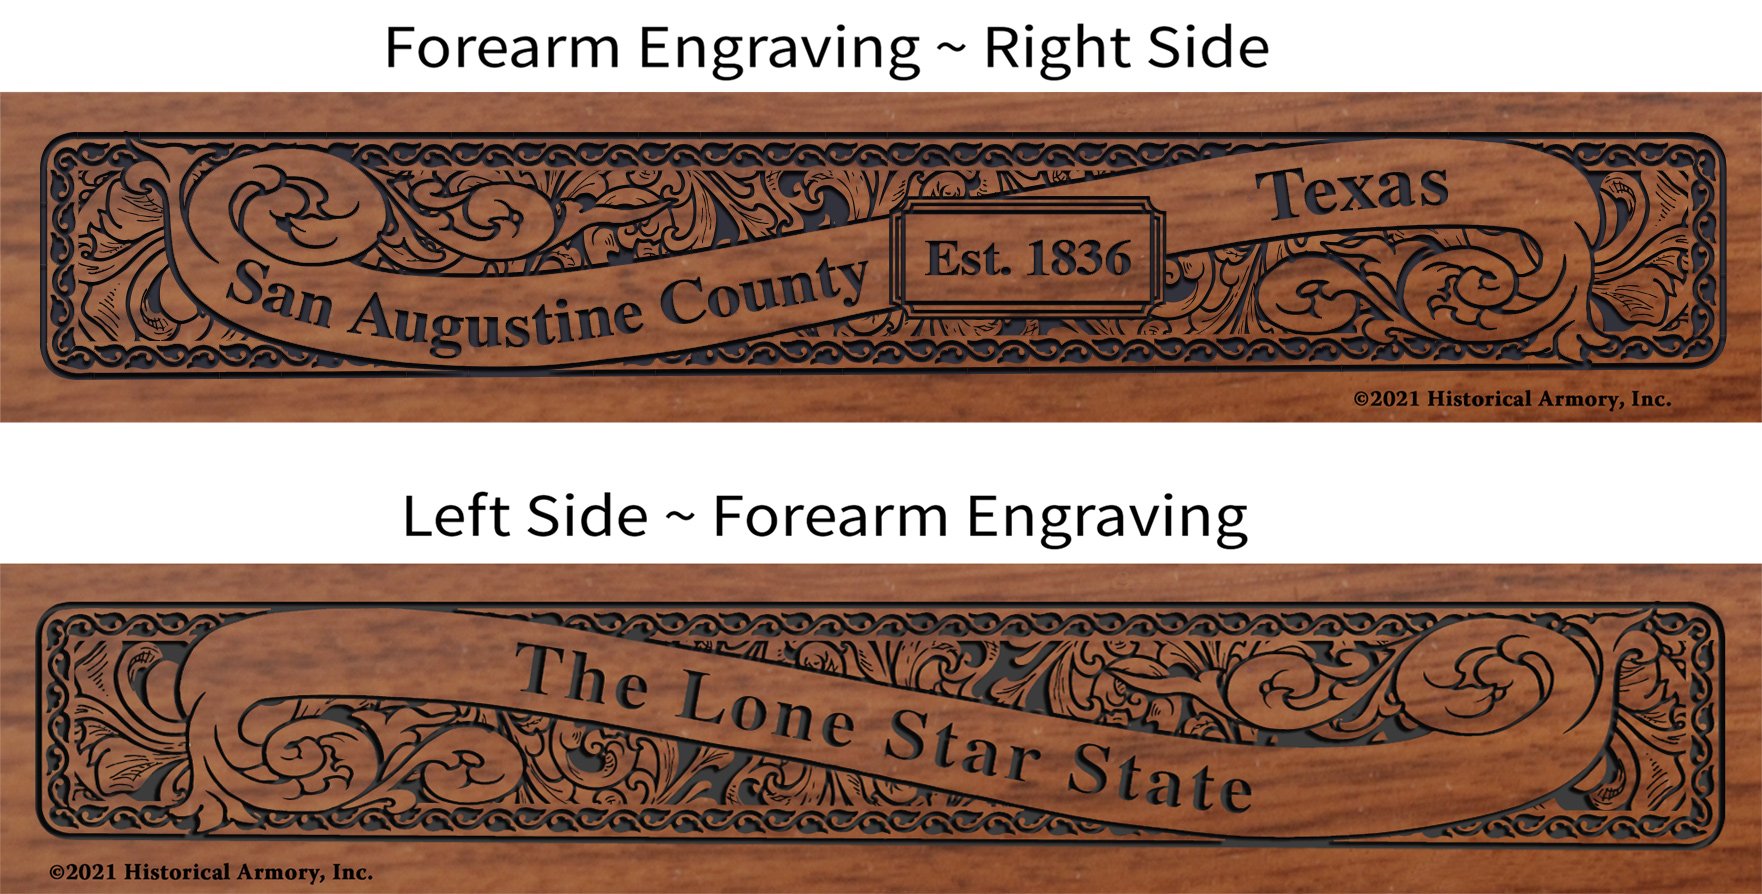 San Augustine County Texas Establishment and Motto History Engraved Rifle Forearm